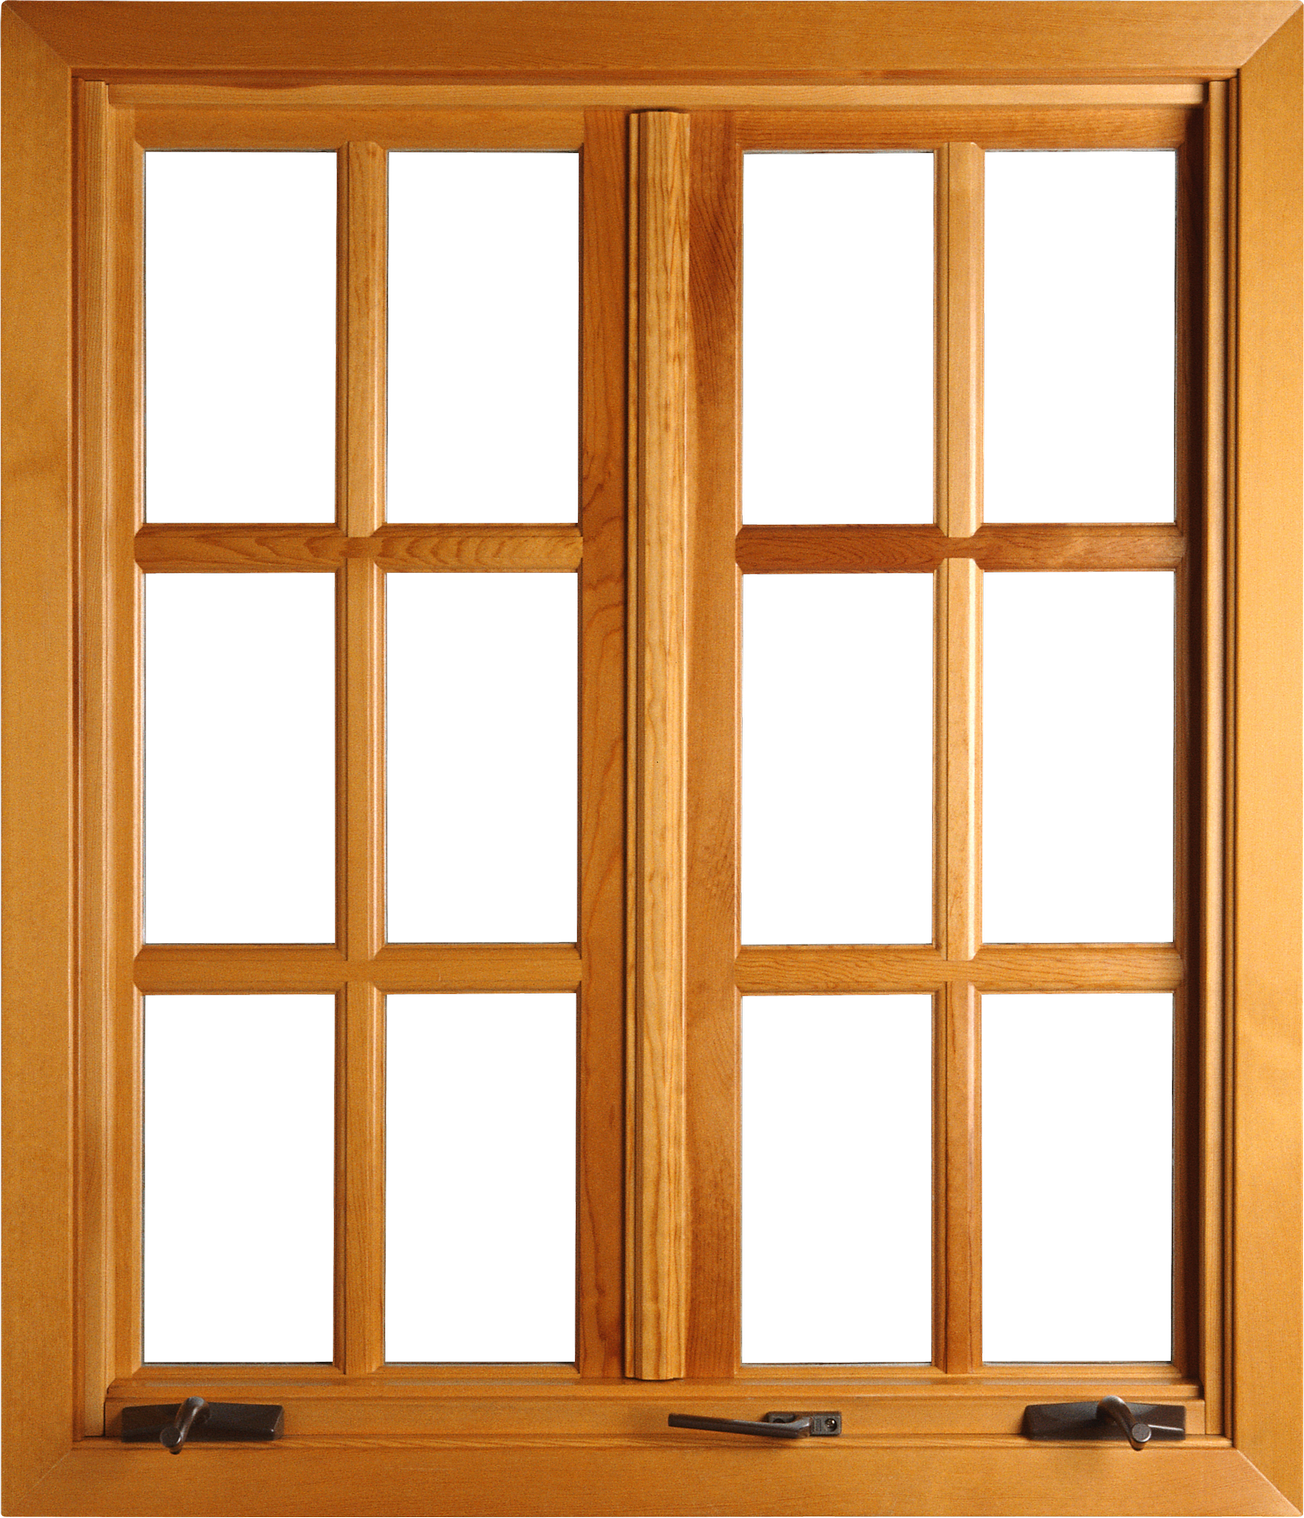 Wooden House Windows Image Transparente